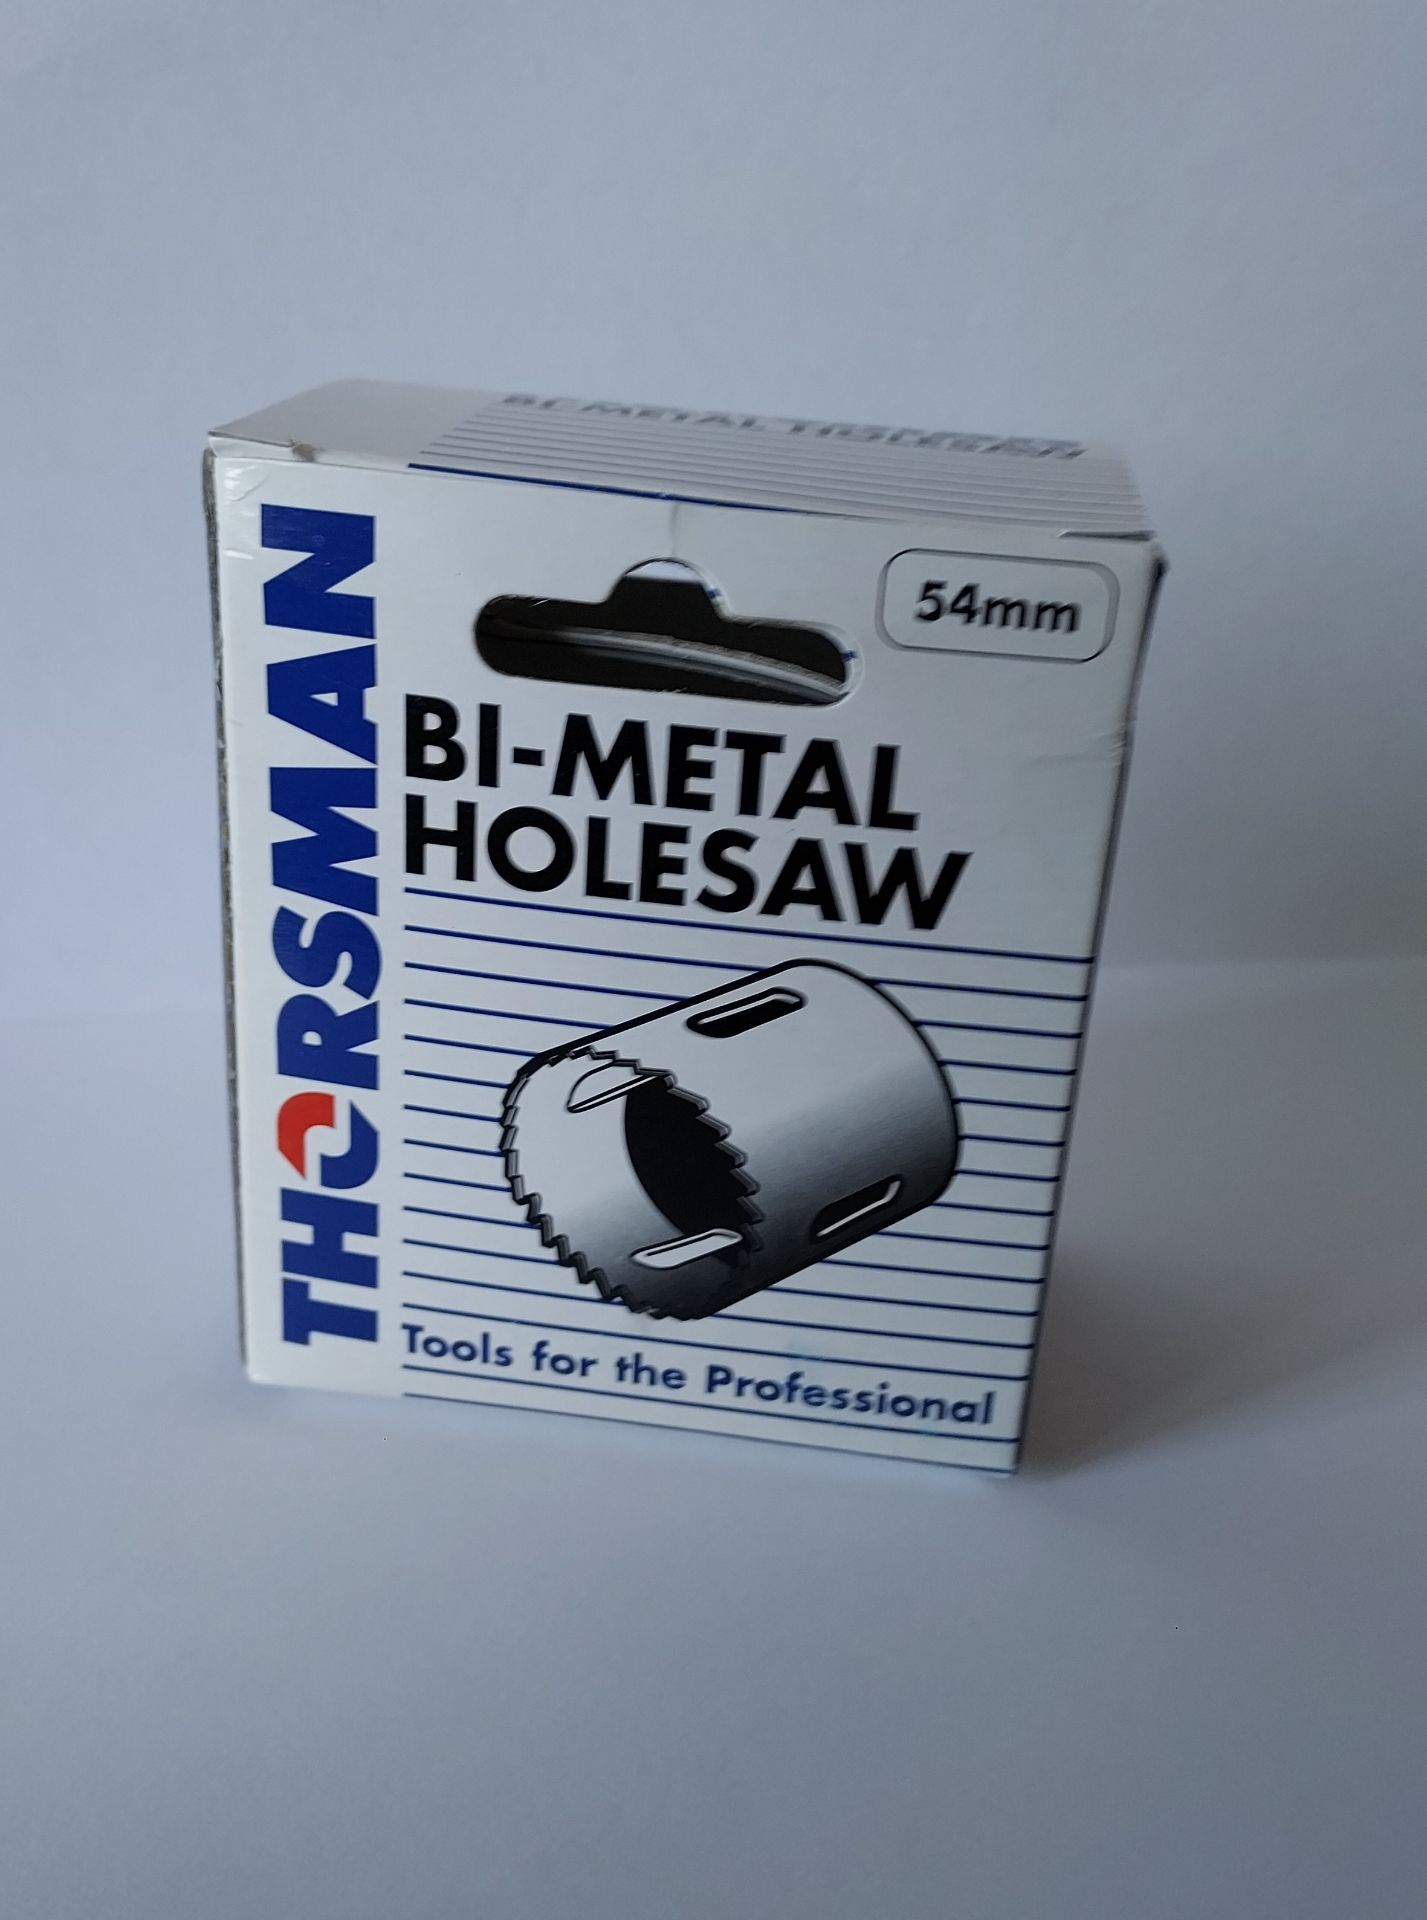 10 x Thorsman Bi-Metal Hole saw 54 mm-- Retail value £4.99 each